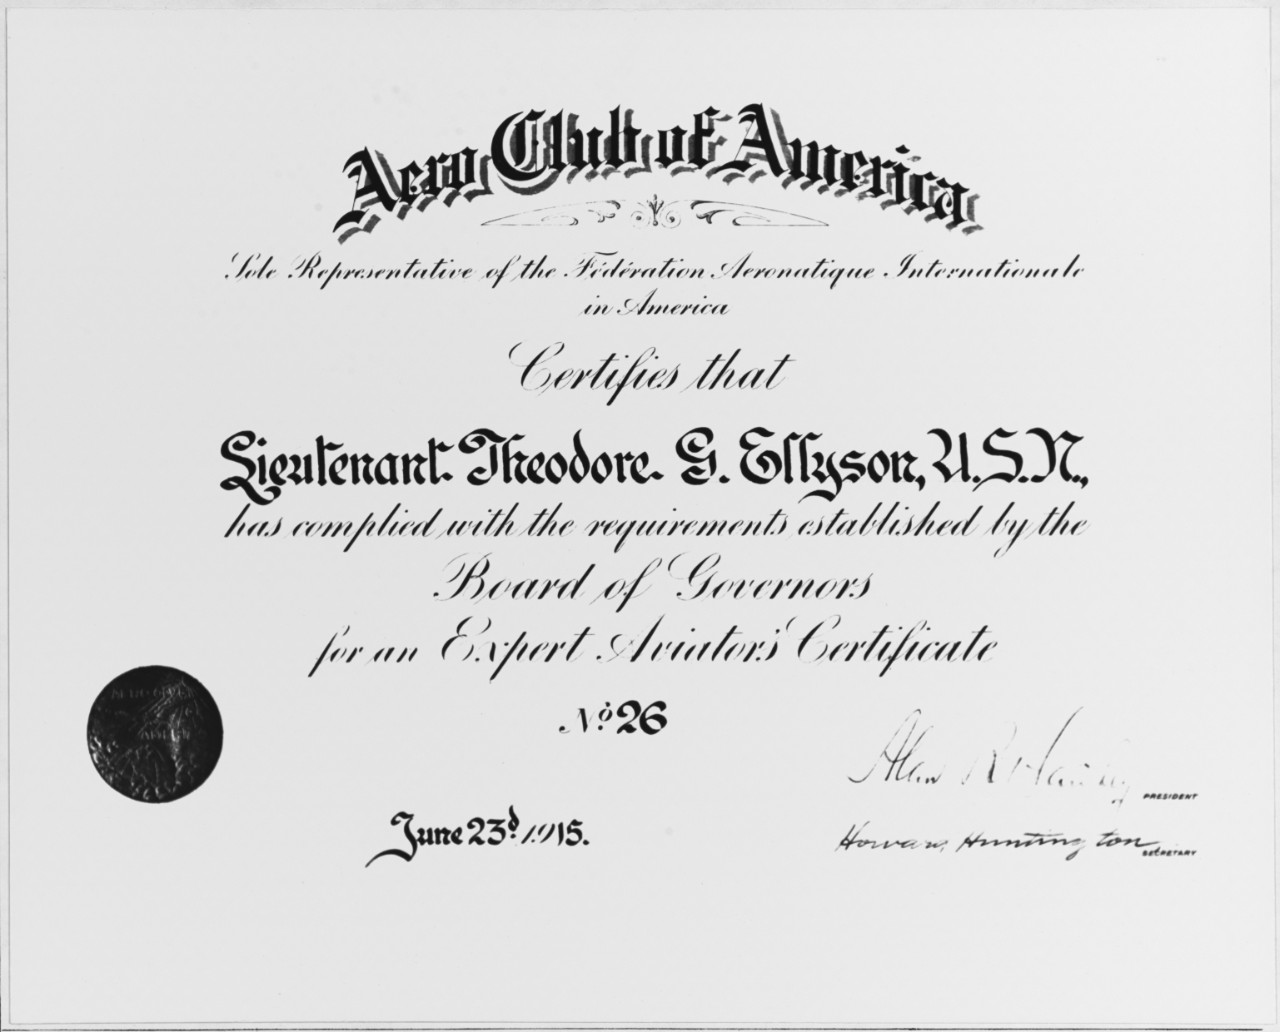 Ellyson's Aero Club of America certificate